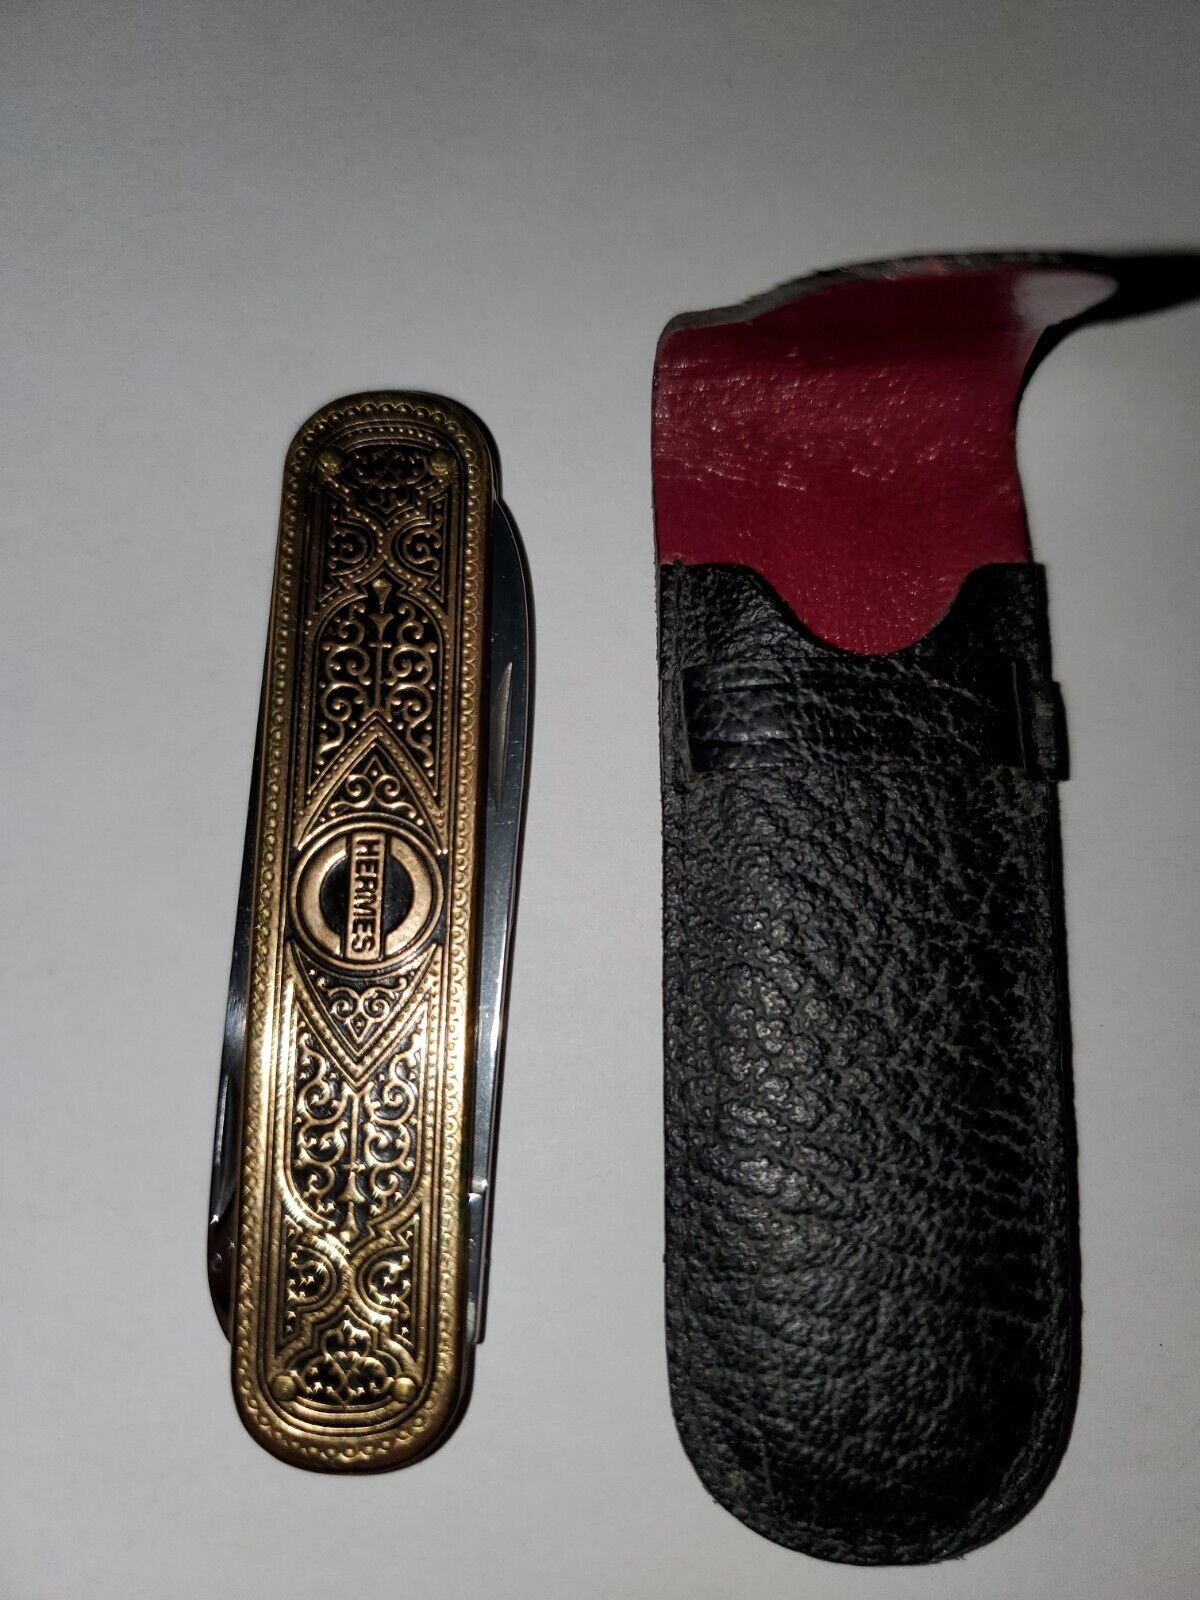 Vintage Hermes Lady's Knife with Case 3-Blade Bierhoff Solingen Rostfrei Germany